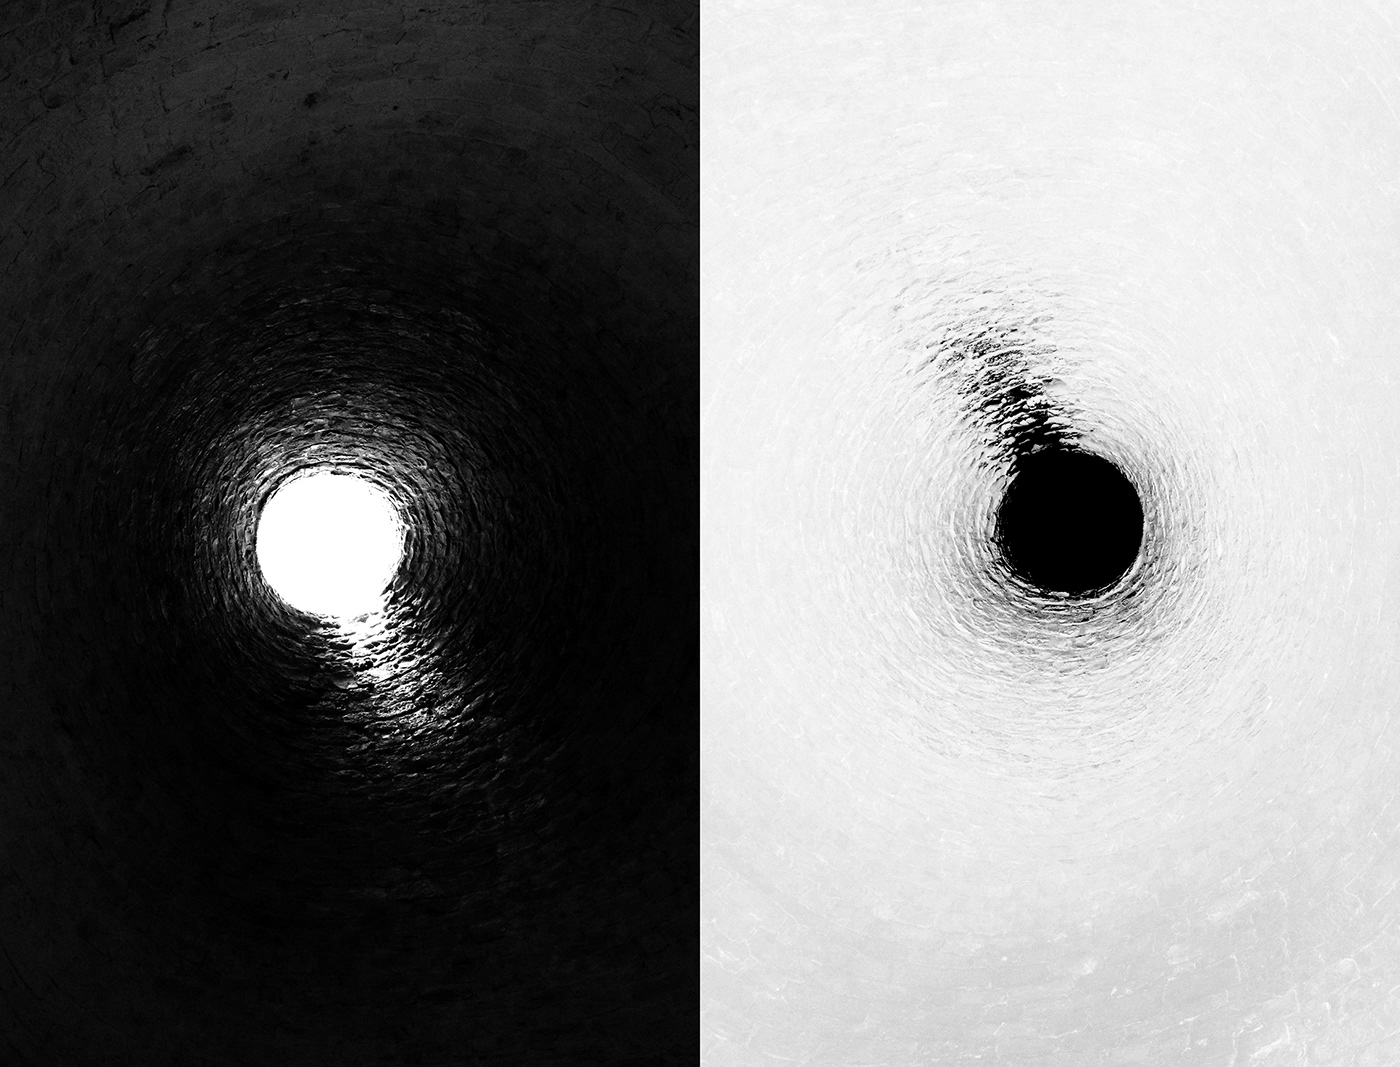 blackandwhite Photography  Edited contrast reversal black reflection kunst inspire art